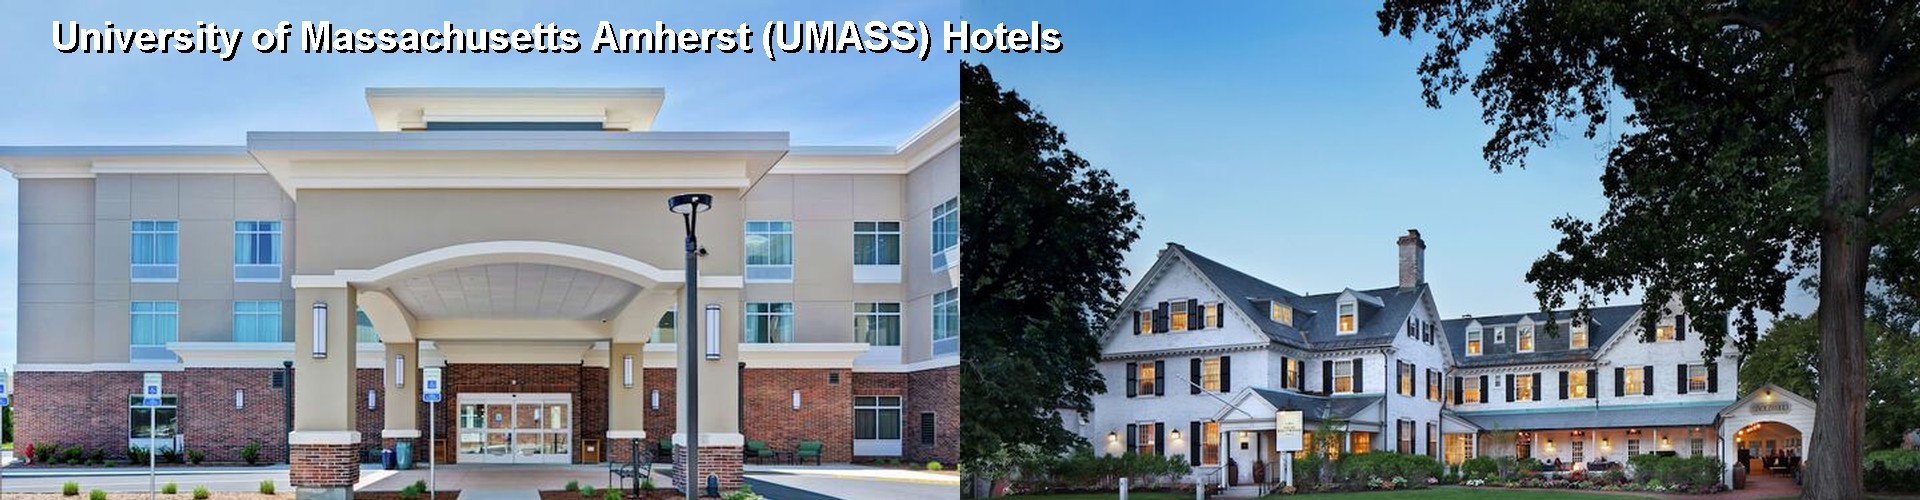 5 Best Hotels near University of Massachusetts Amherst (UMASS)